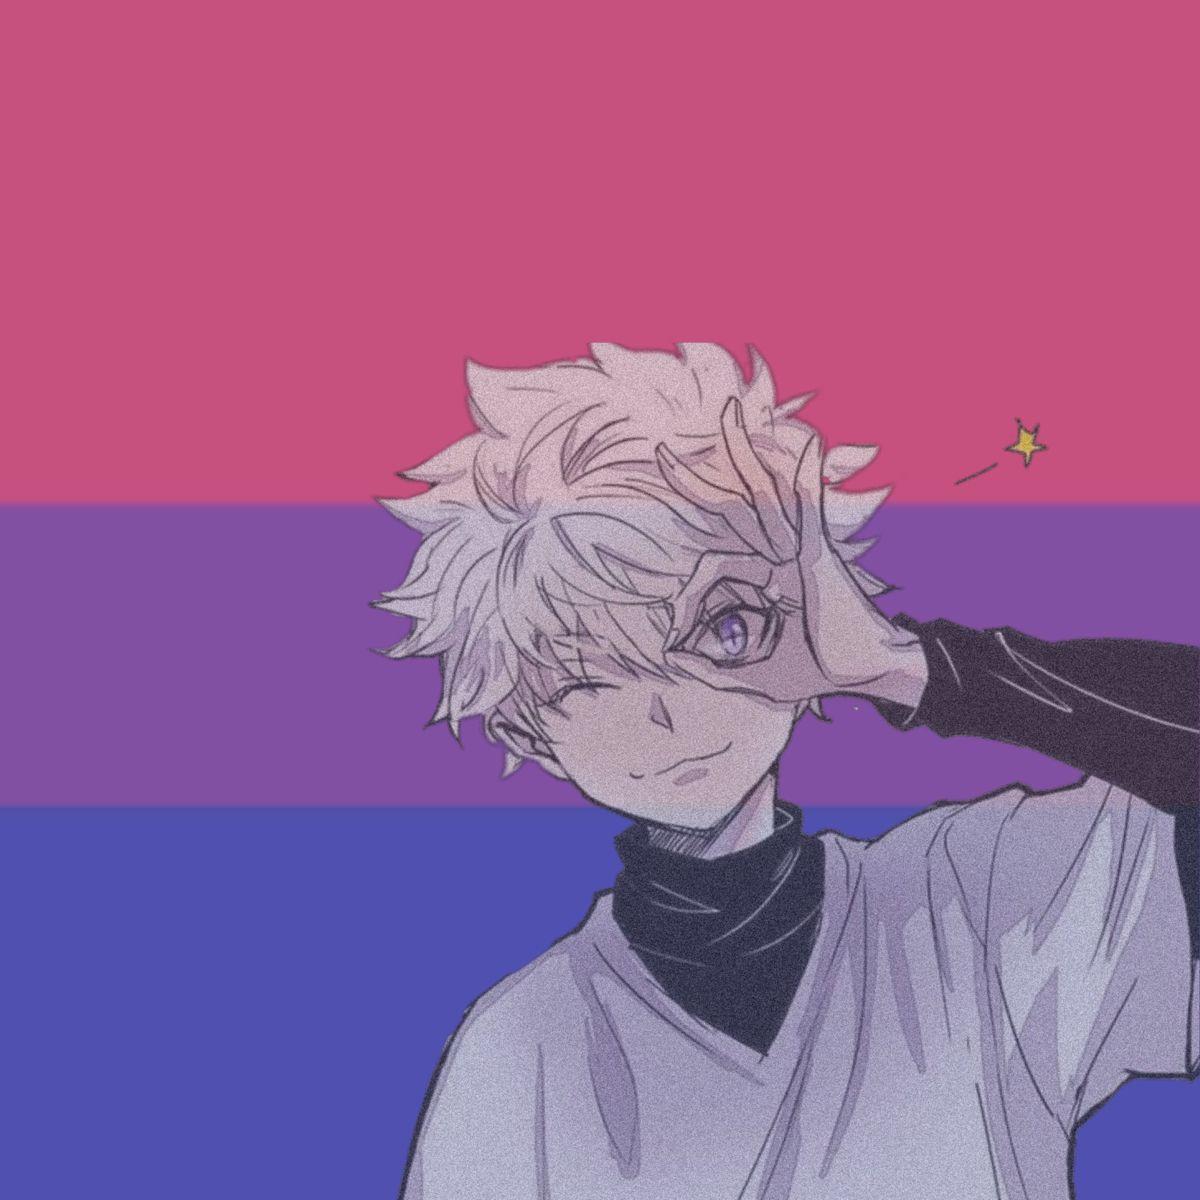 funny gay anime wallpaper